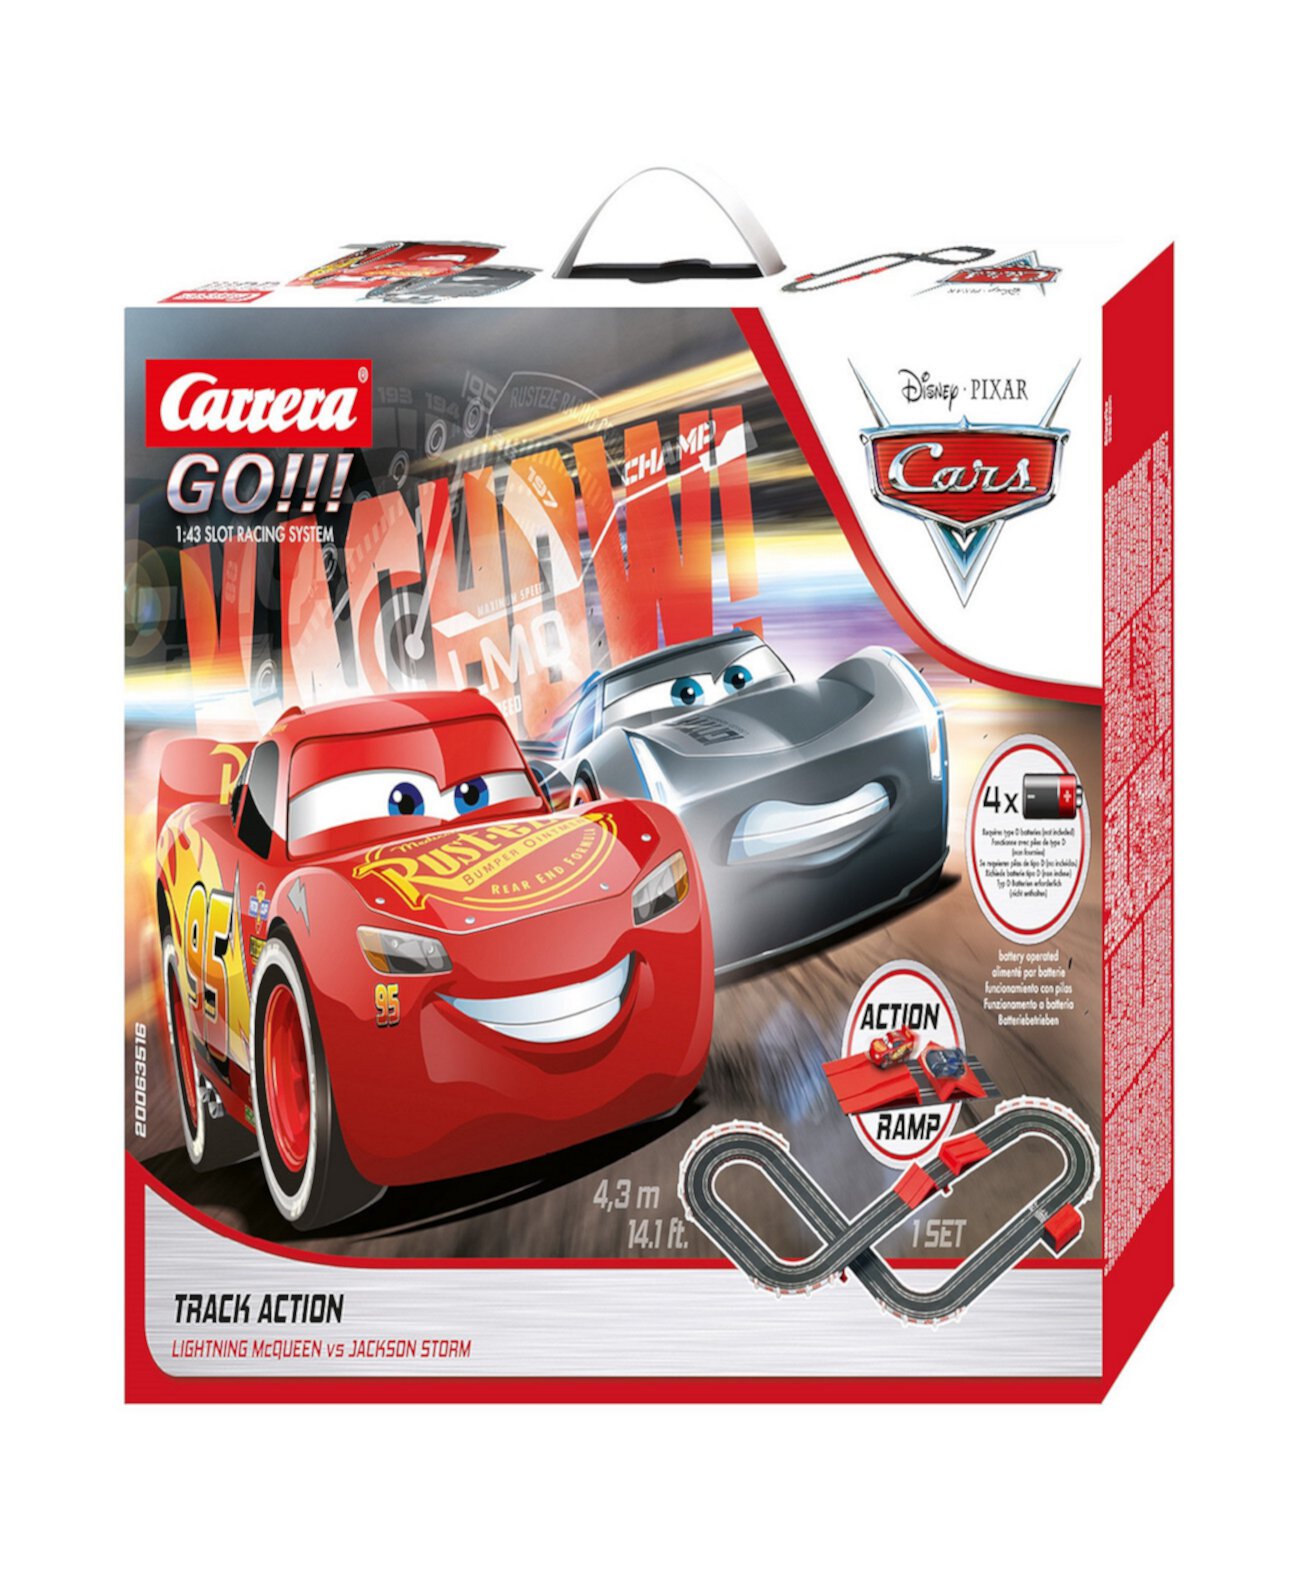 Go на батарейках Disney Pixar Cars Track Action Electric Powered Slot Car Race Track with Jump Ramp Set Carrera